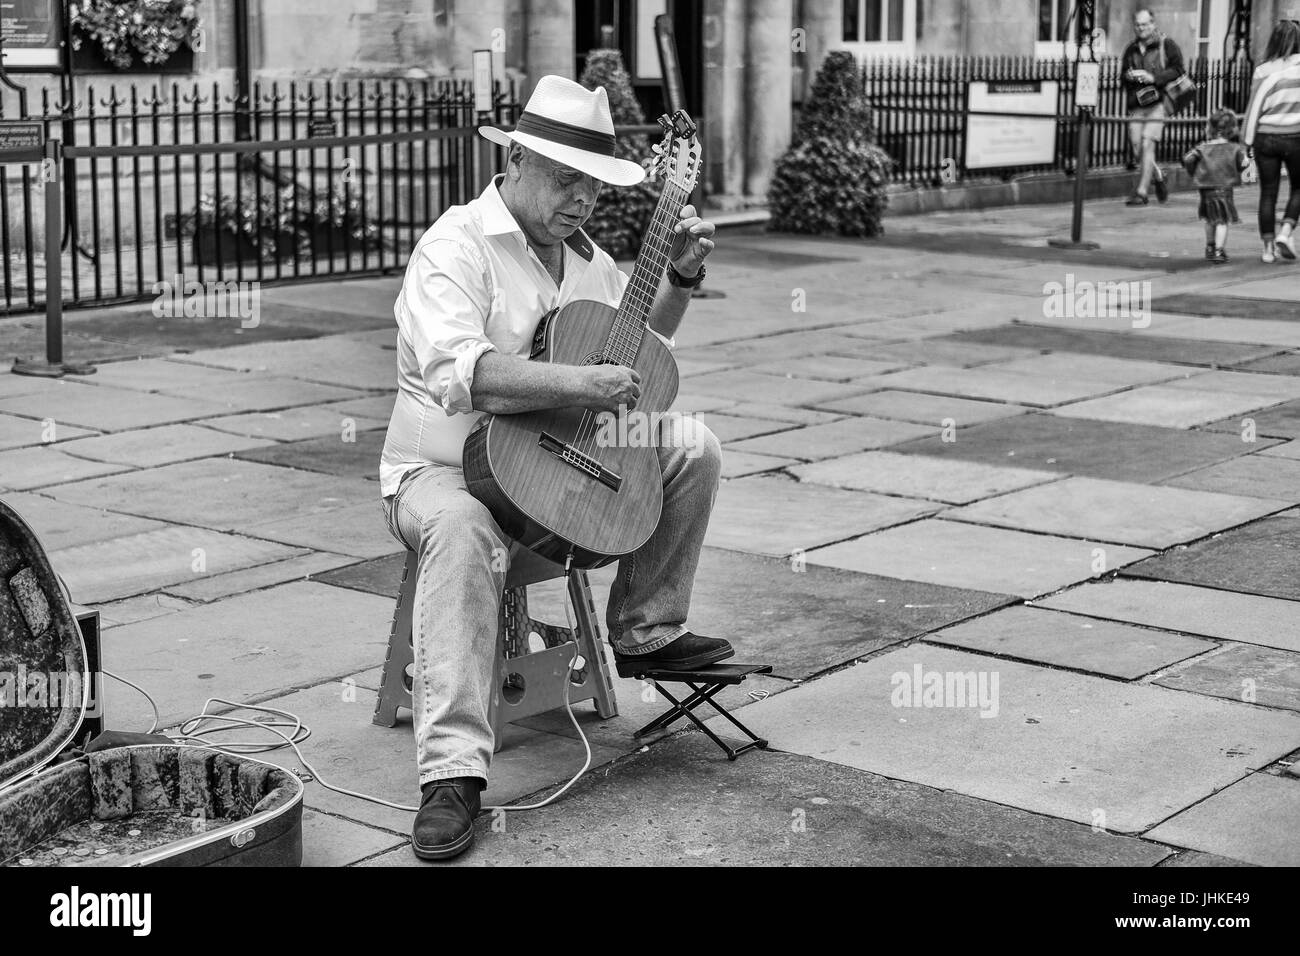 Street Photography Bath UK Stockfoto